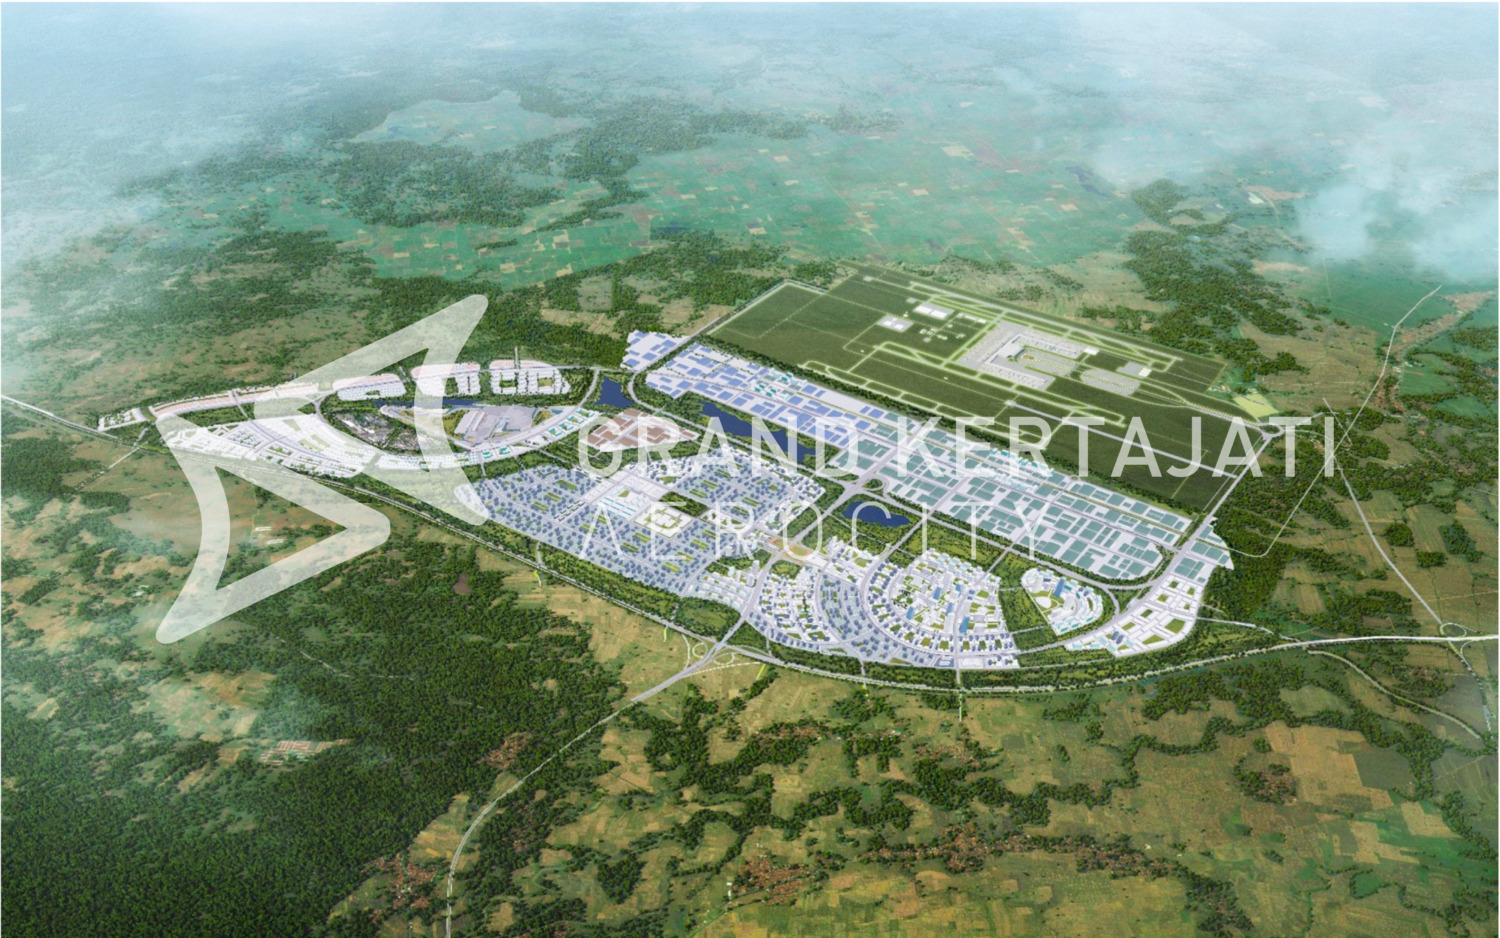 Jokowi Teken Zona Perkotaan Kawasan Rebana, Kecamatan Ini Berubah Jadi Kota Bandara Pertama di Indonesia